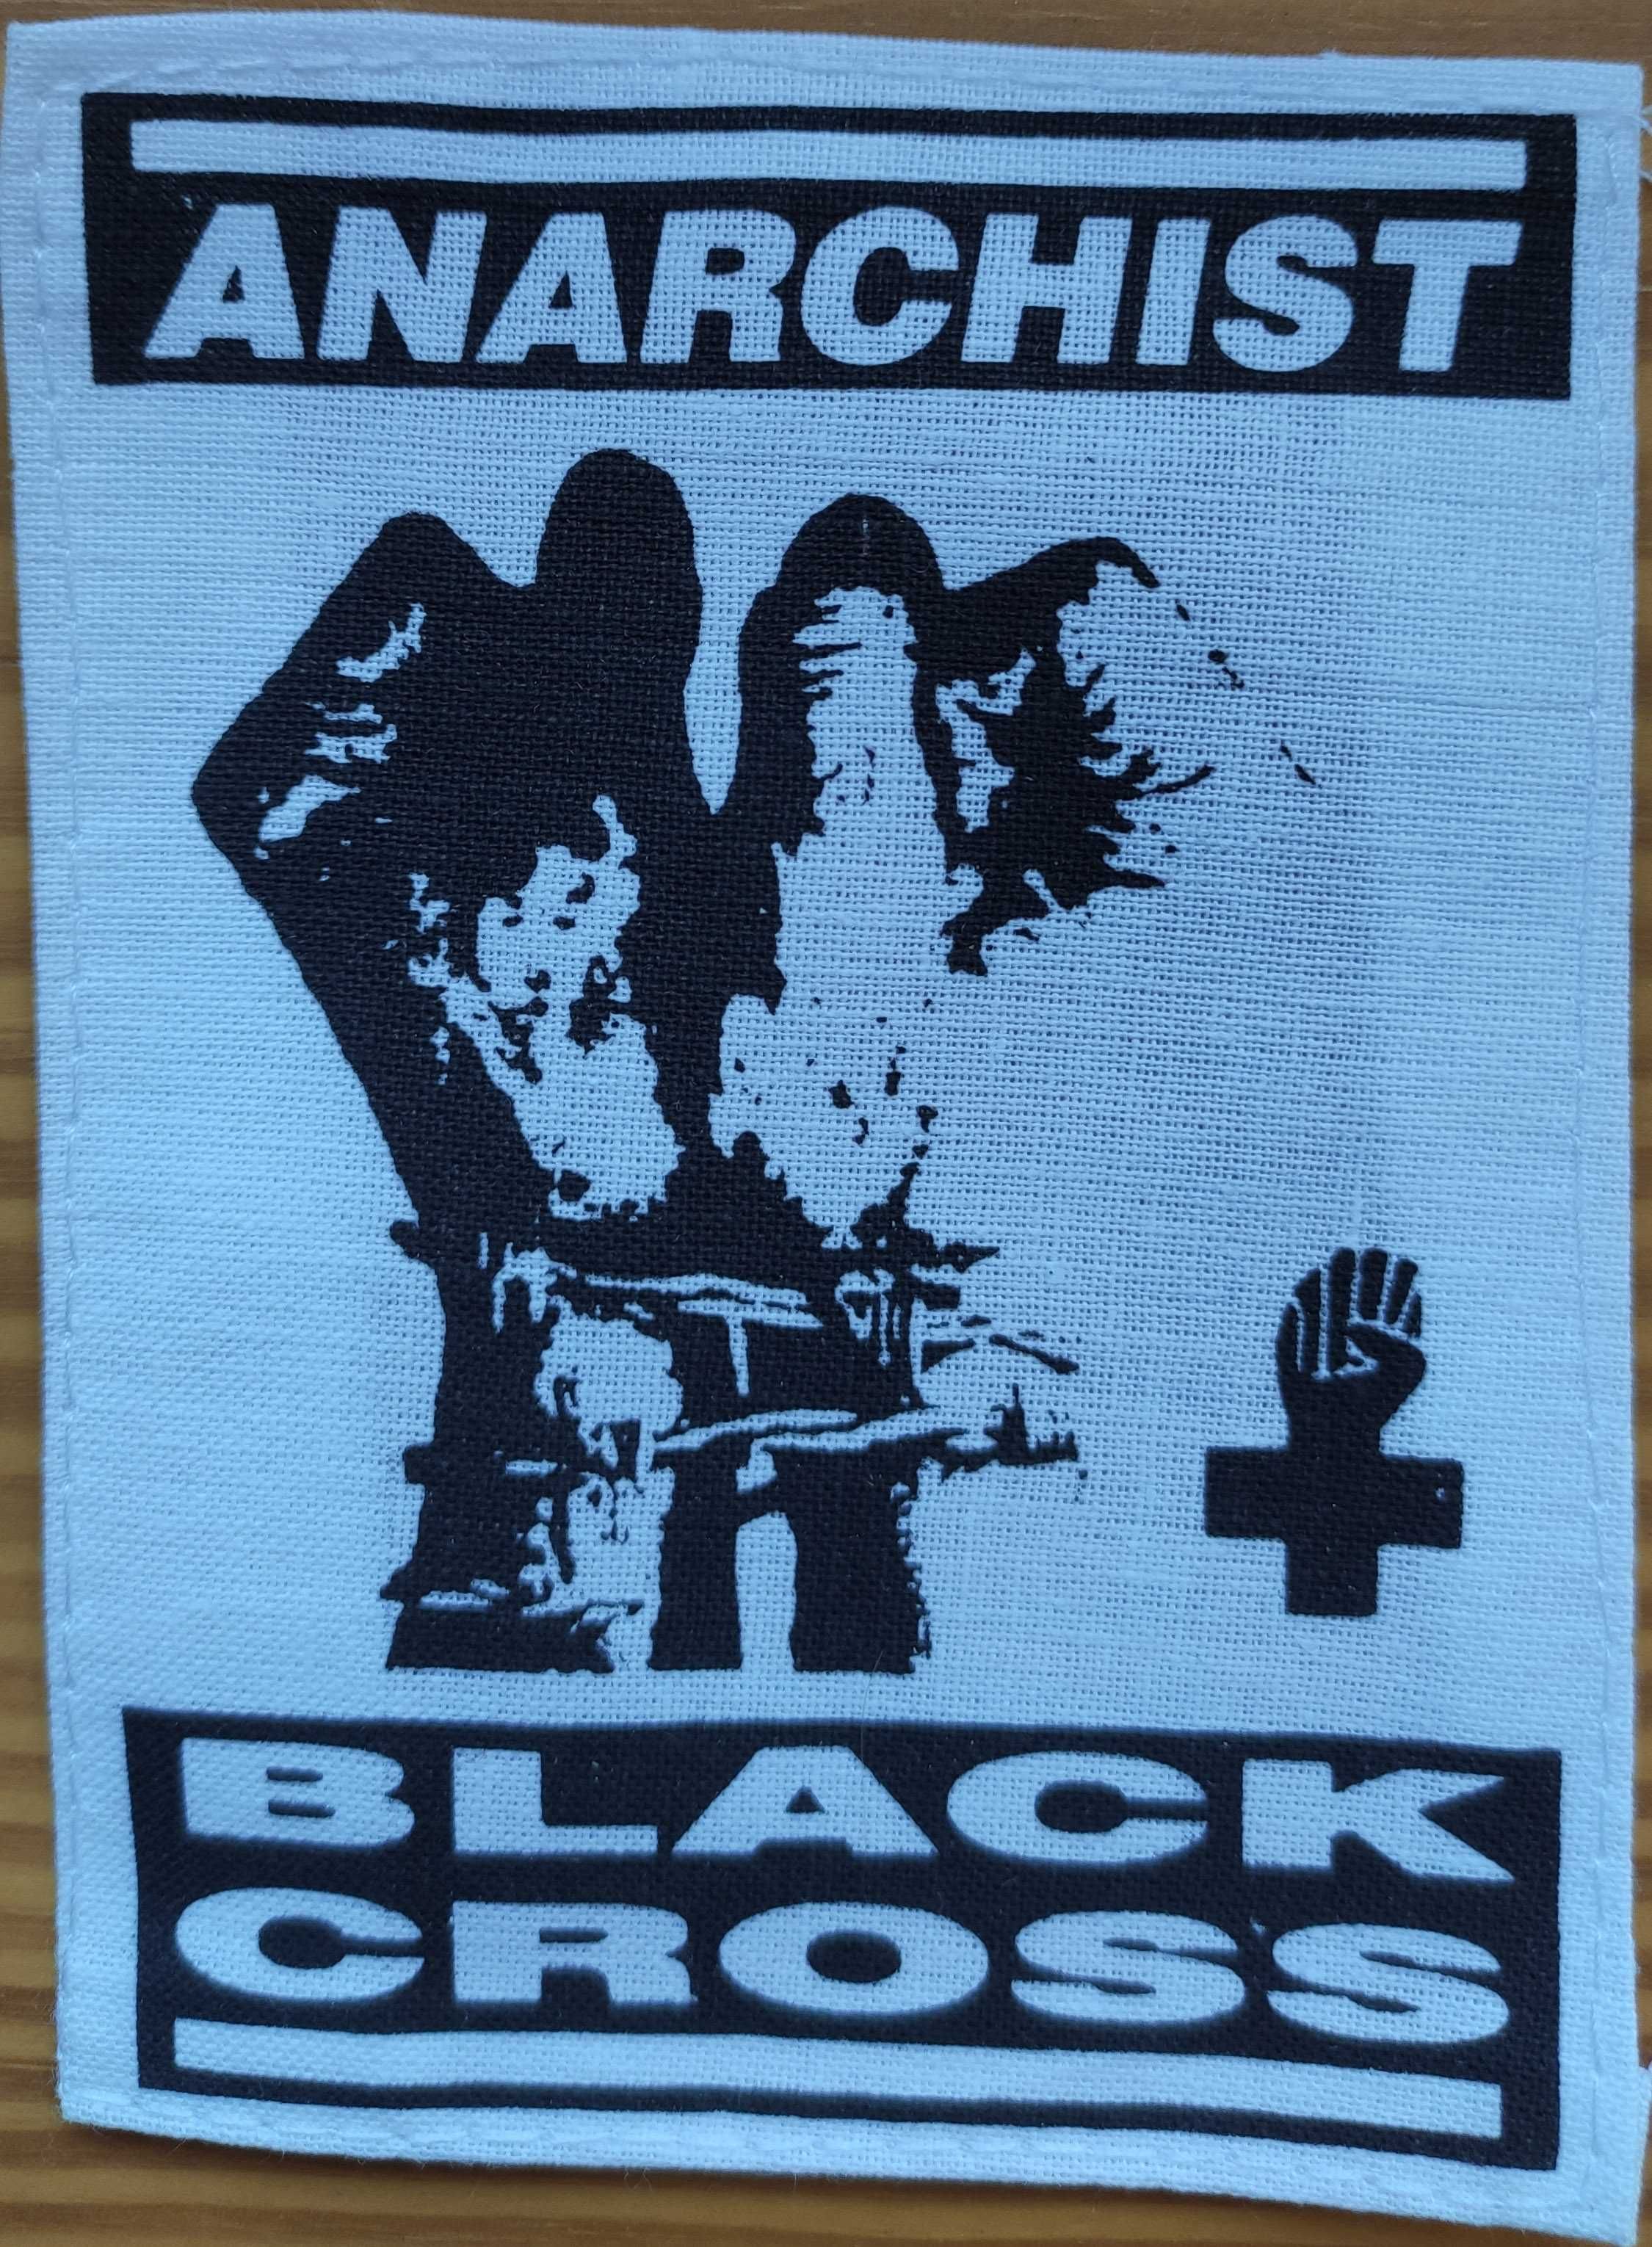 Naszywka: Anarchist Black cross